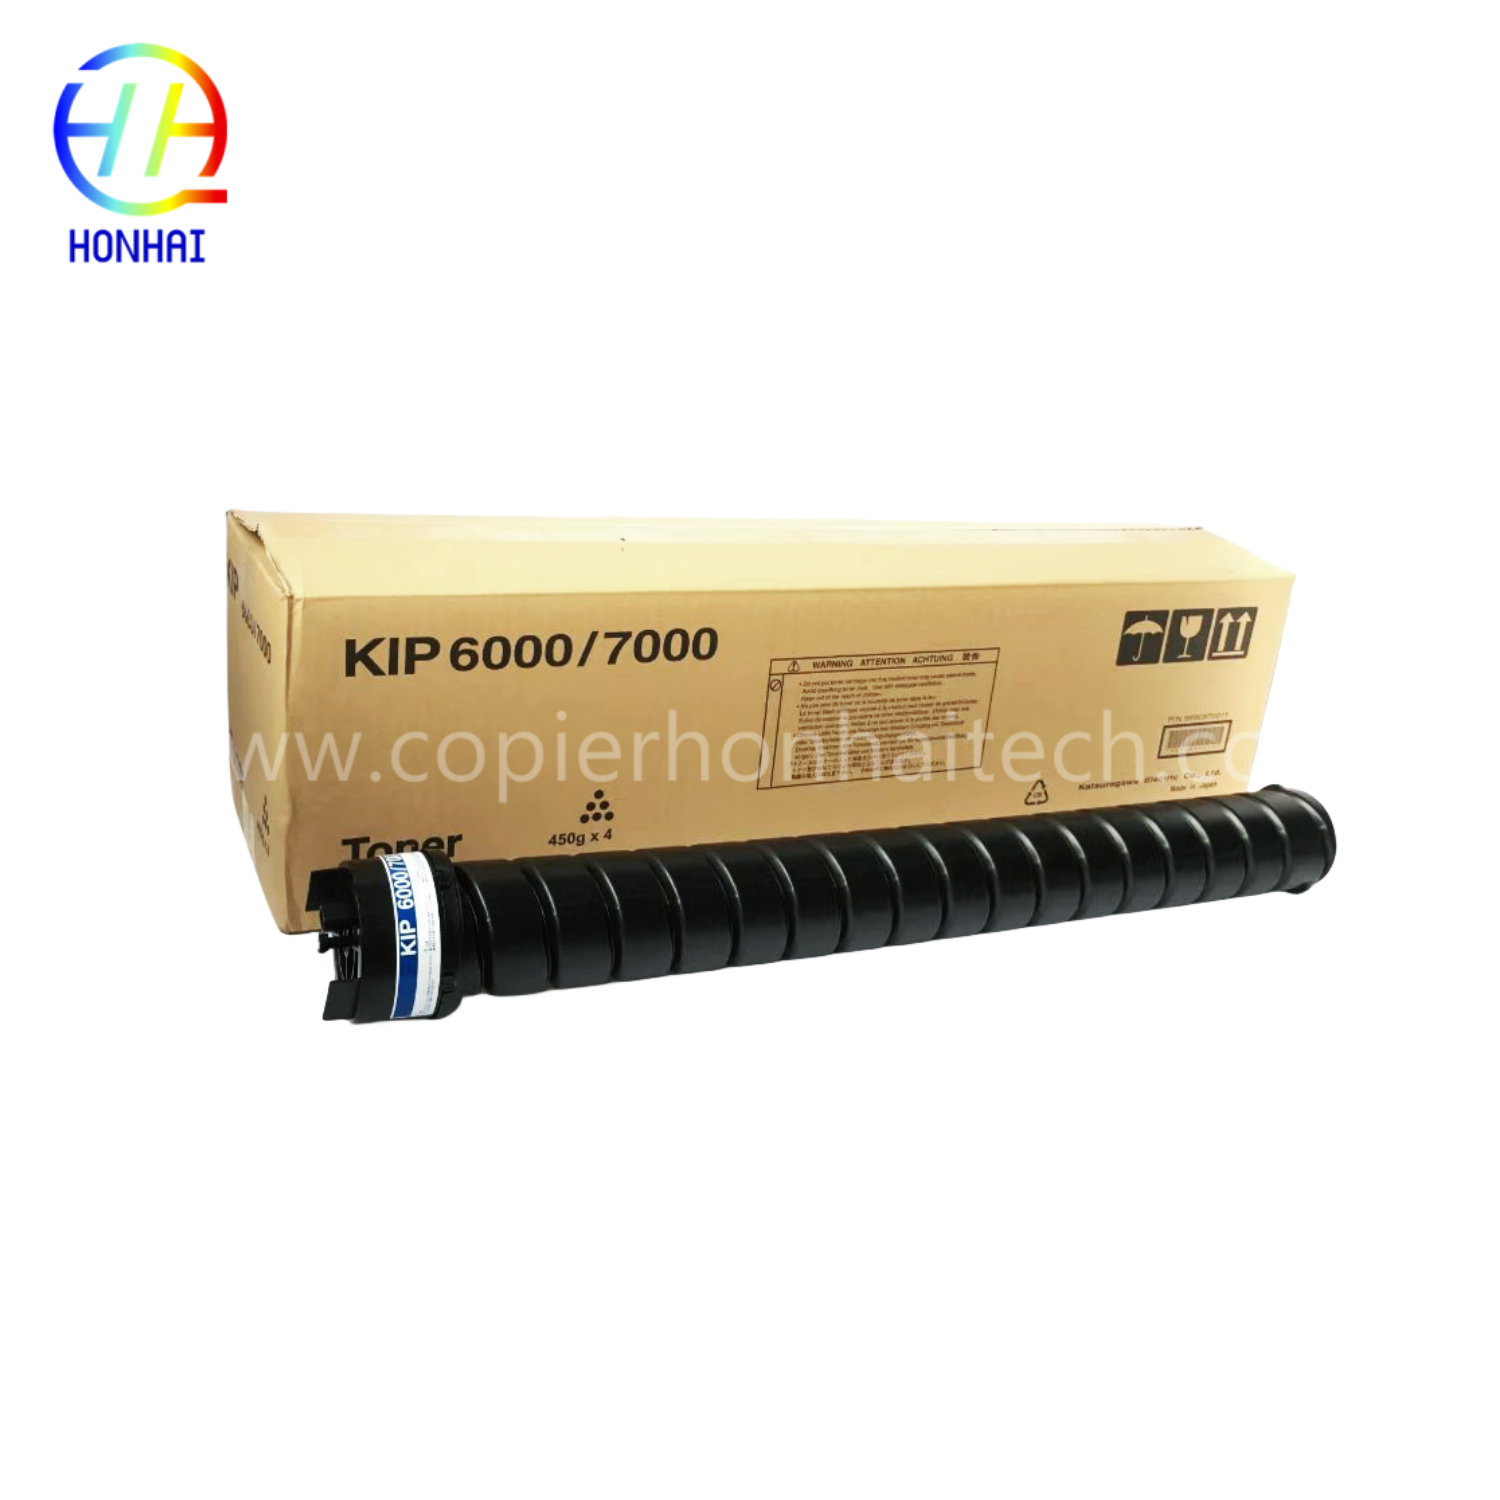 https://www.copierhonhaitech.com/toner-cartridge-for-kip-6000-7000-cyan-black-kip-toner-product/